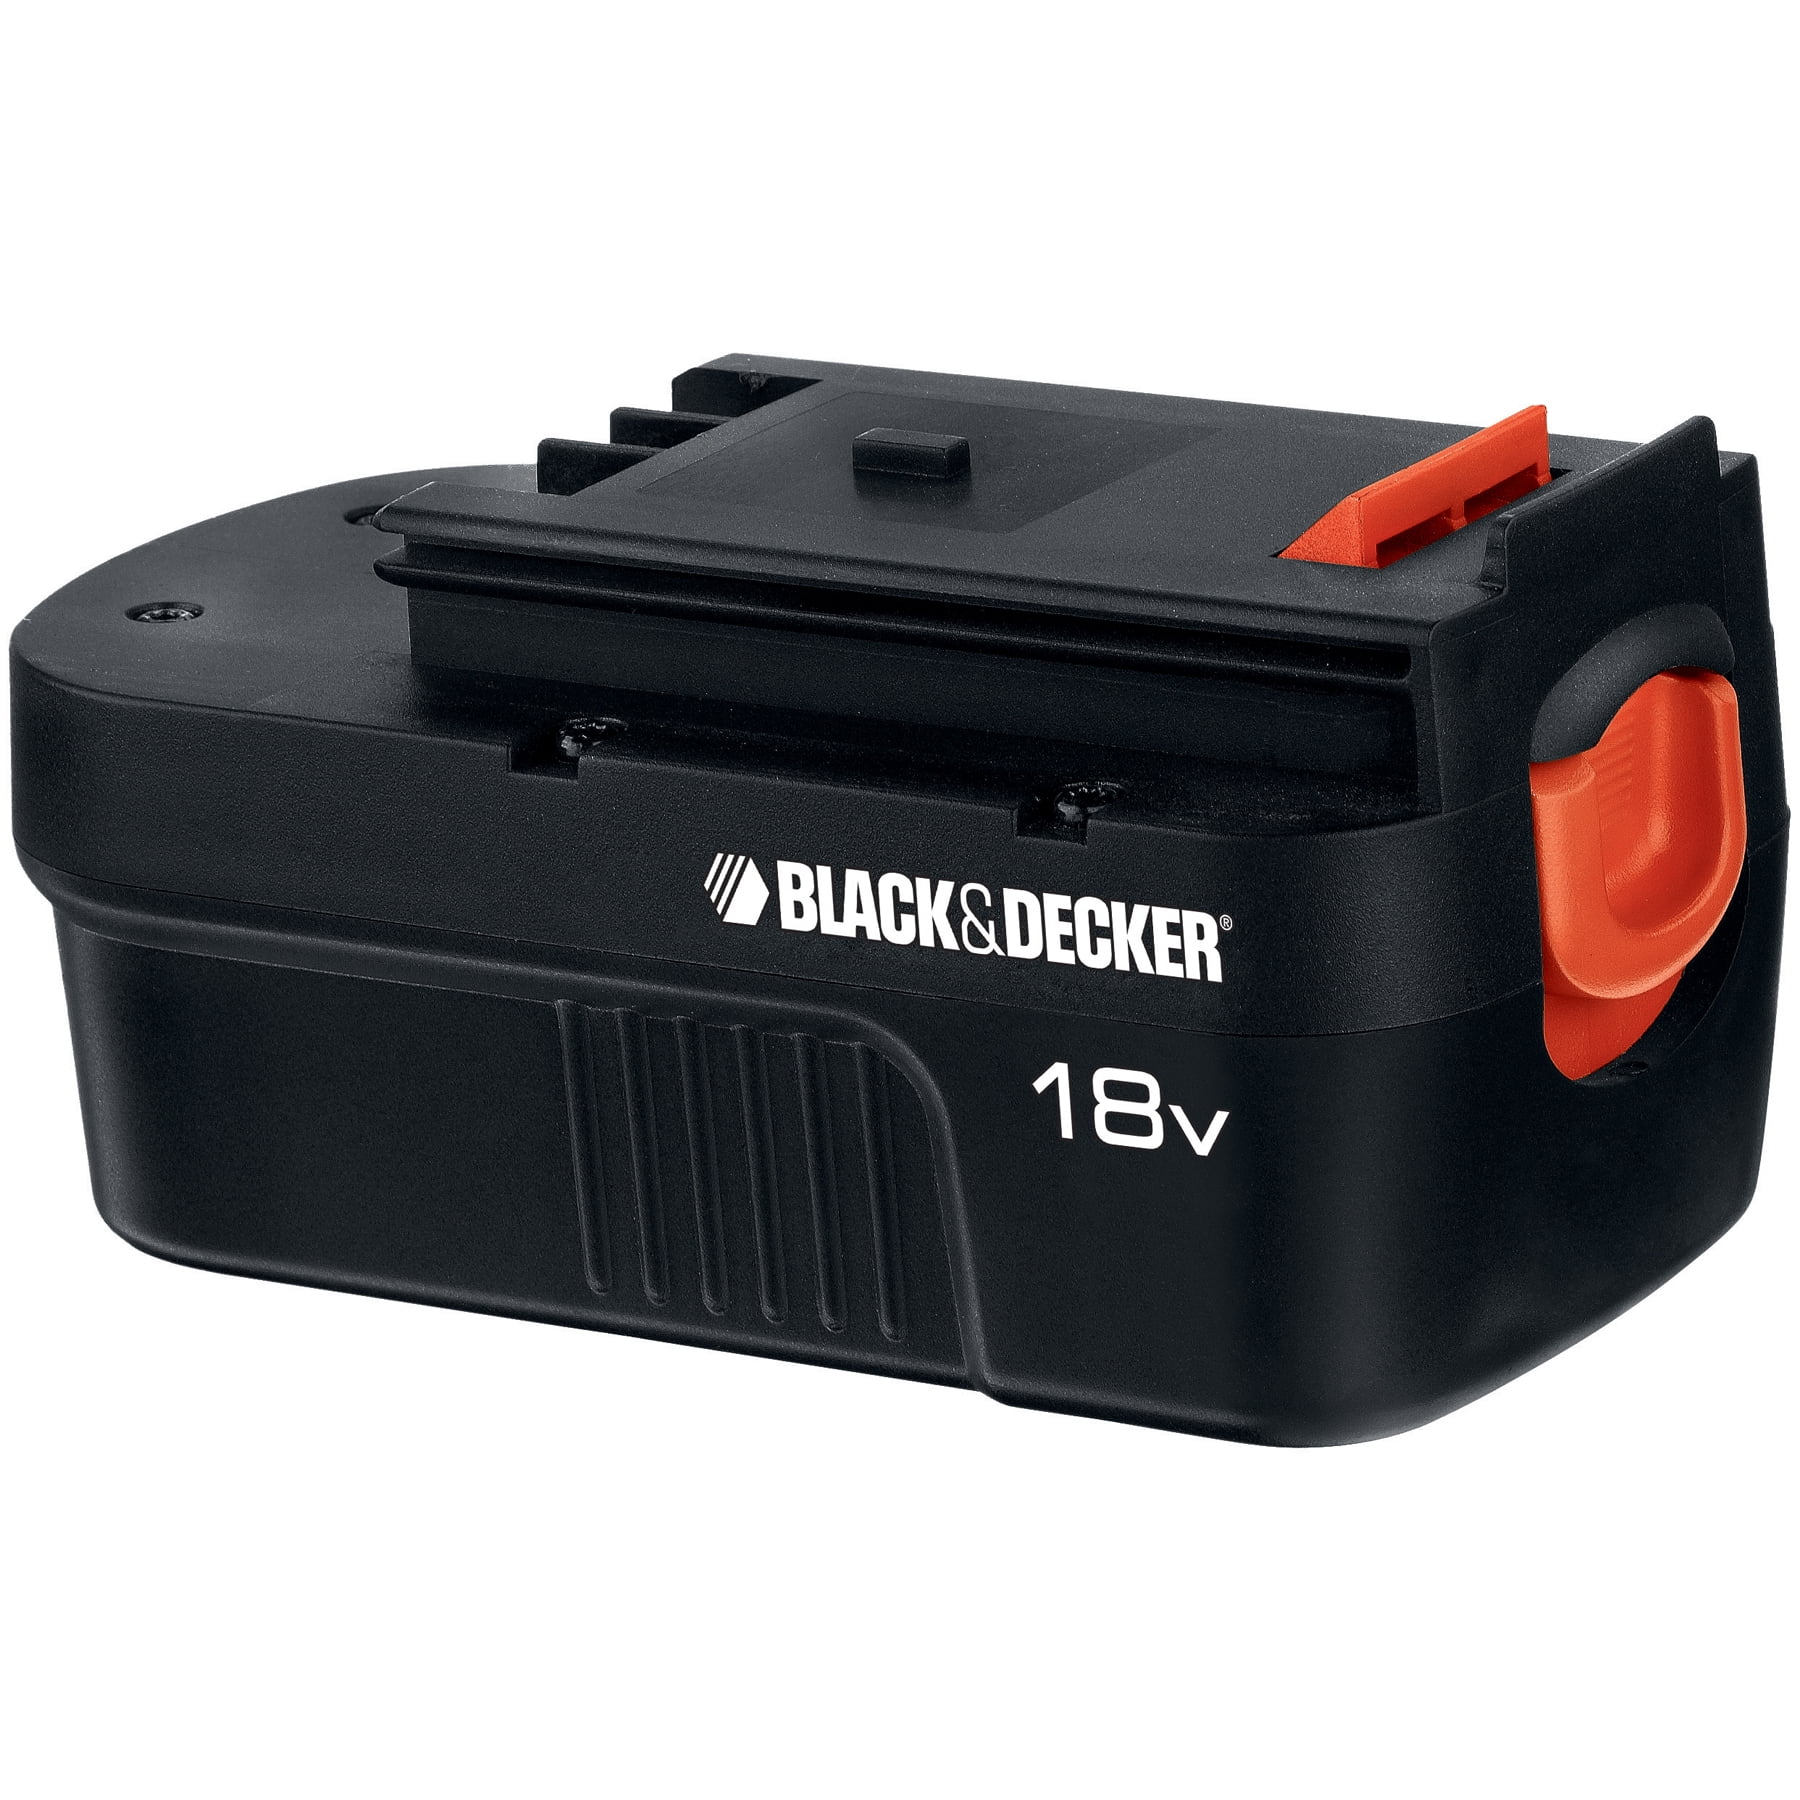 Battery 18. Аккумулятор (18 в; 2.0 Ач; li-ion) для Black & Decker CD, KS, PS (bl2018-XJ) OEM 074939. Аккумулятор Black Decker 18v. Аккумулятор Блэк энд Деккер 18v. Аккумулятор Black+Decker 18 вольт.